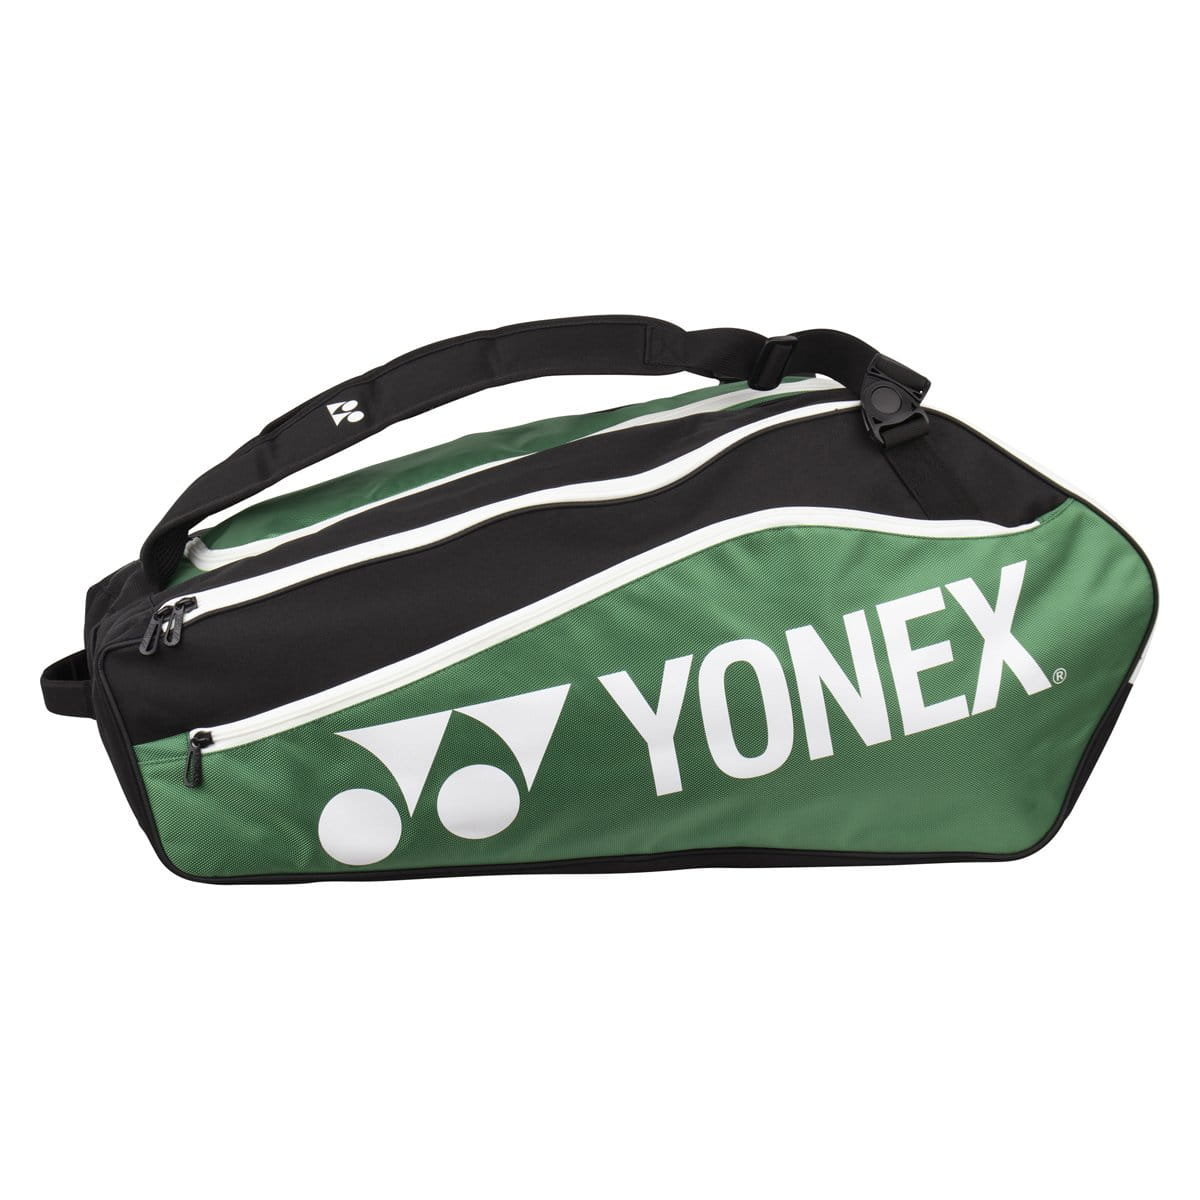 Torba Tenisowa Yonex Club Racket Bag X 12 Black/Green